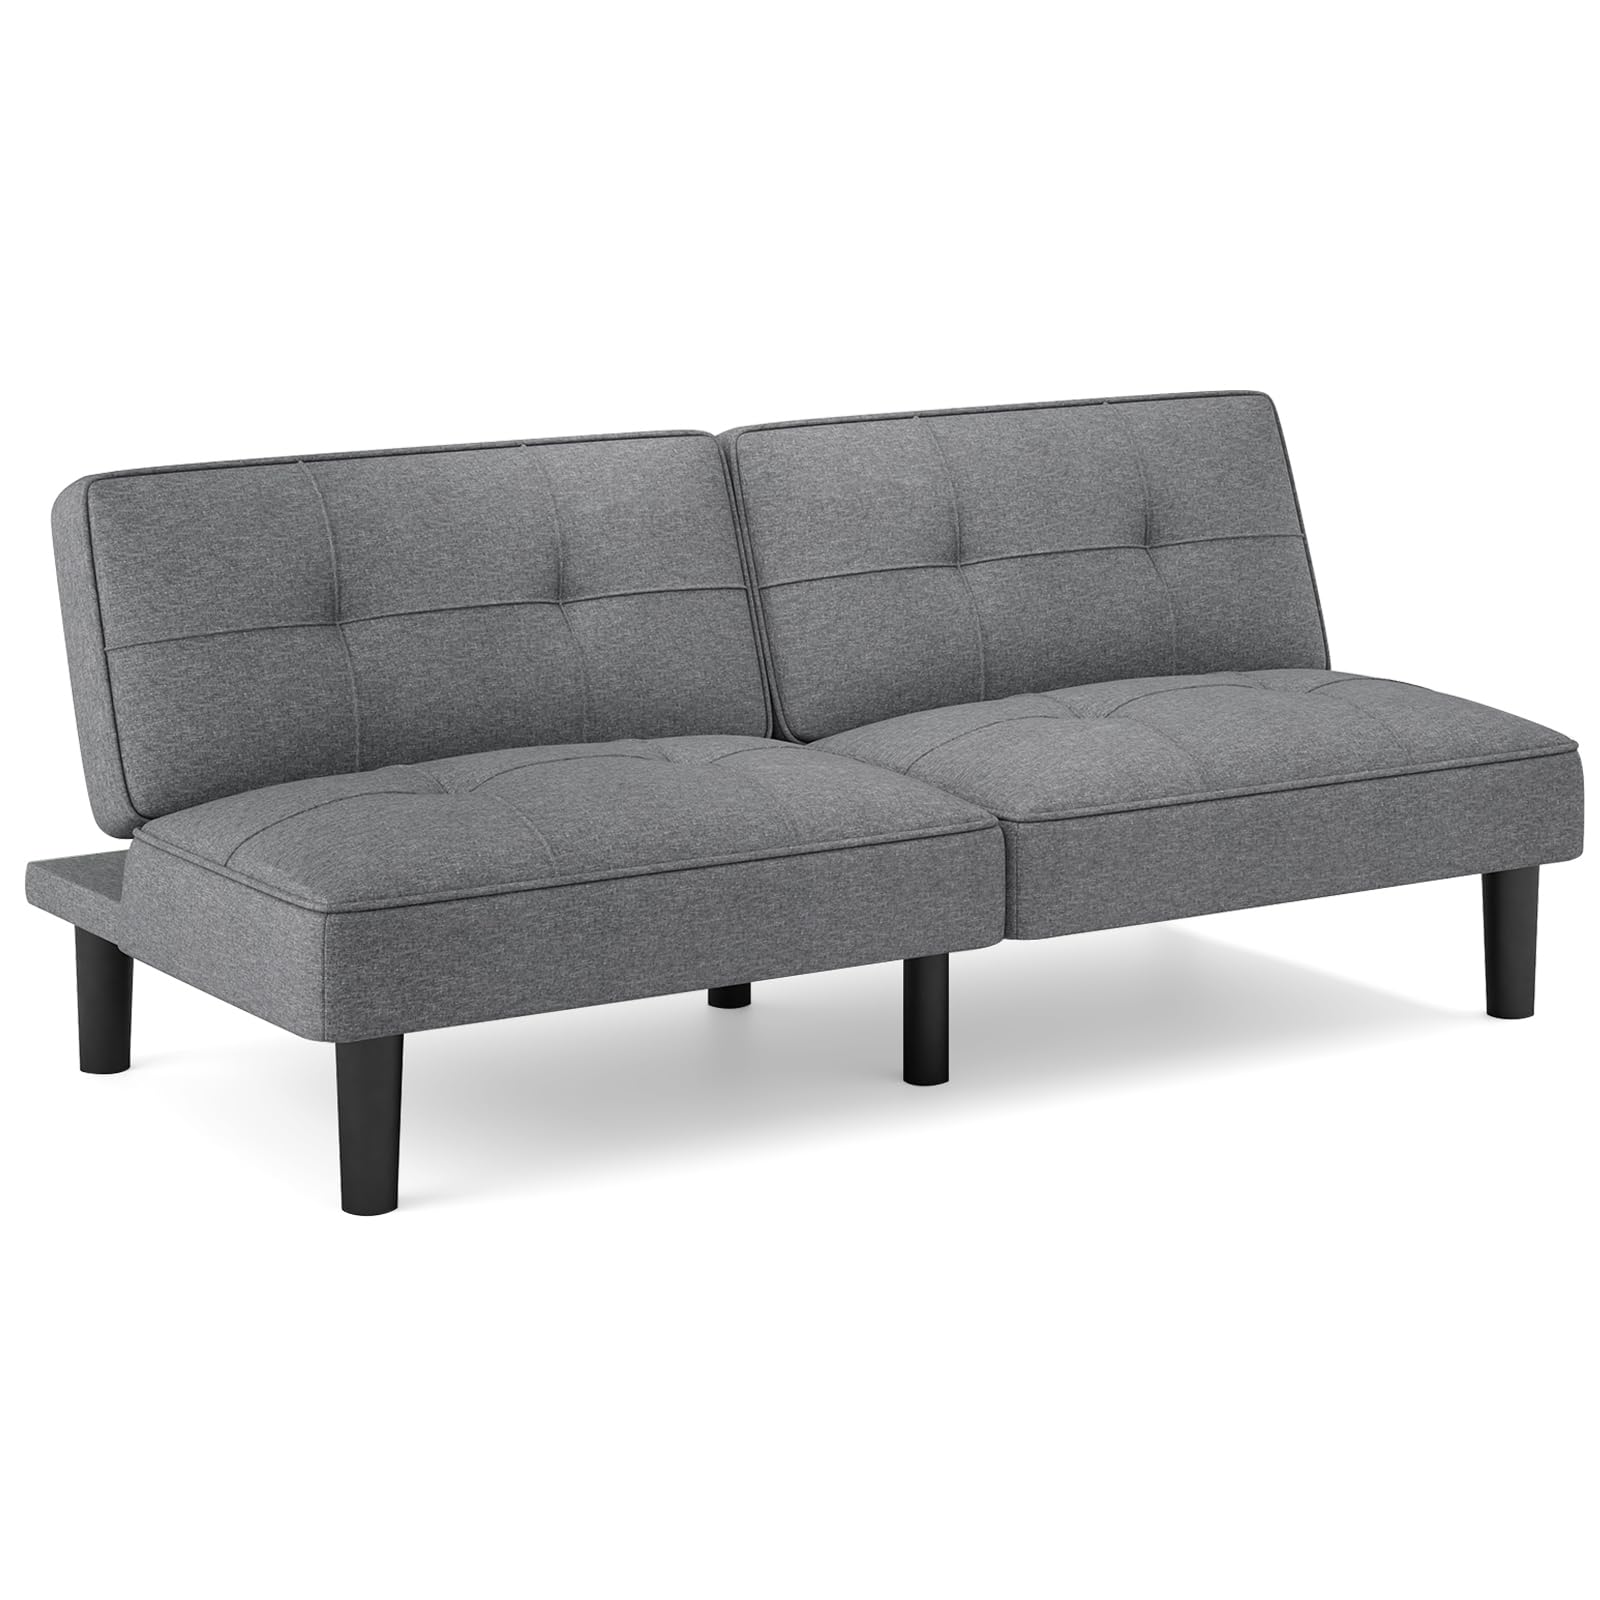 Giantex Convertible Futon Sofa Bed, Upholstered Folding Recliner